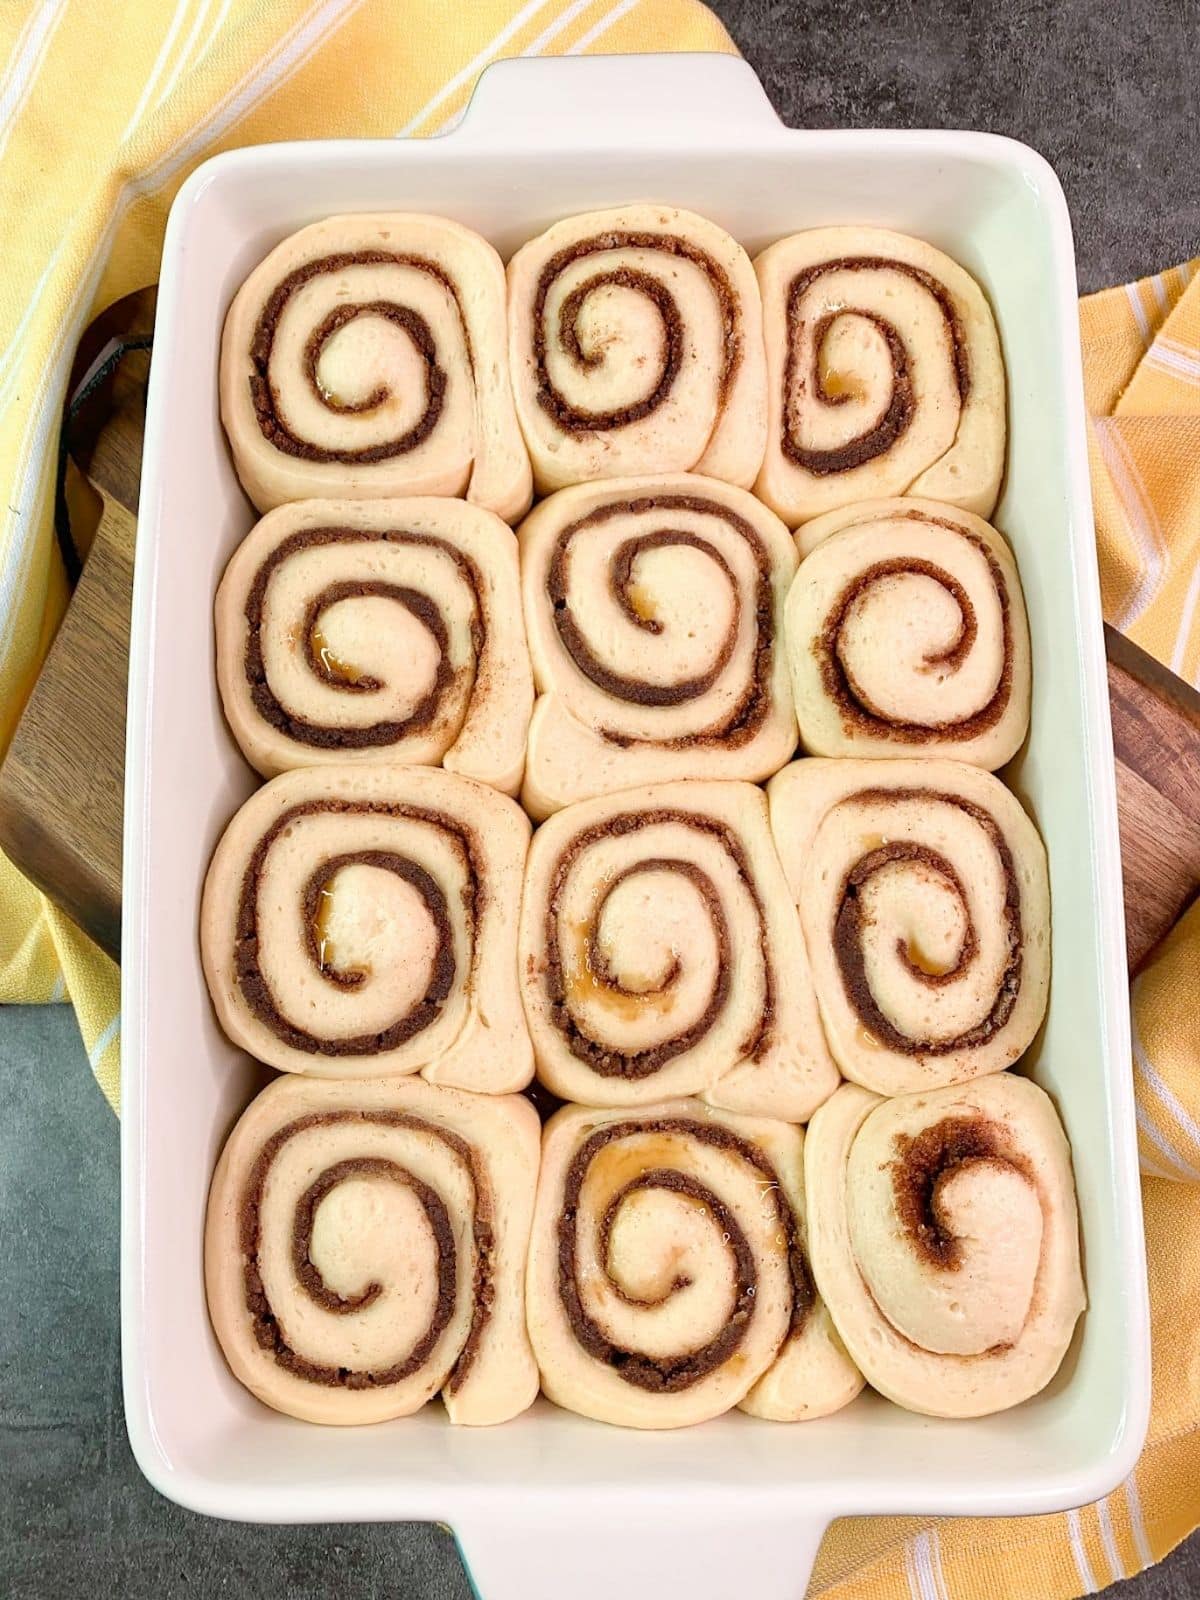 cinnamon rolls doubled in size.